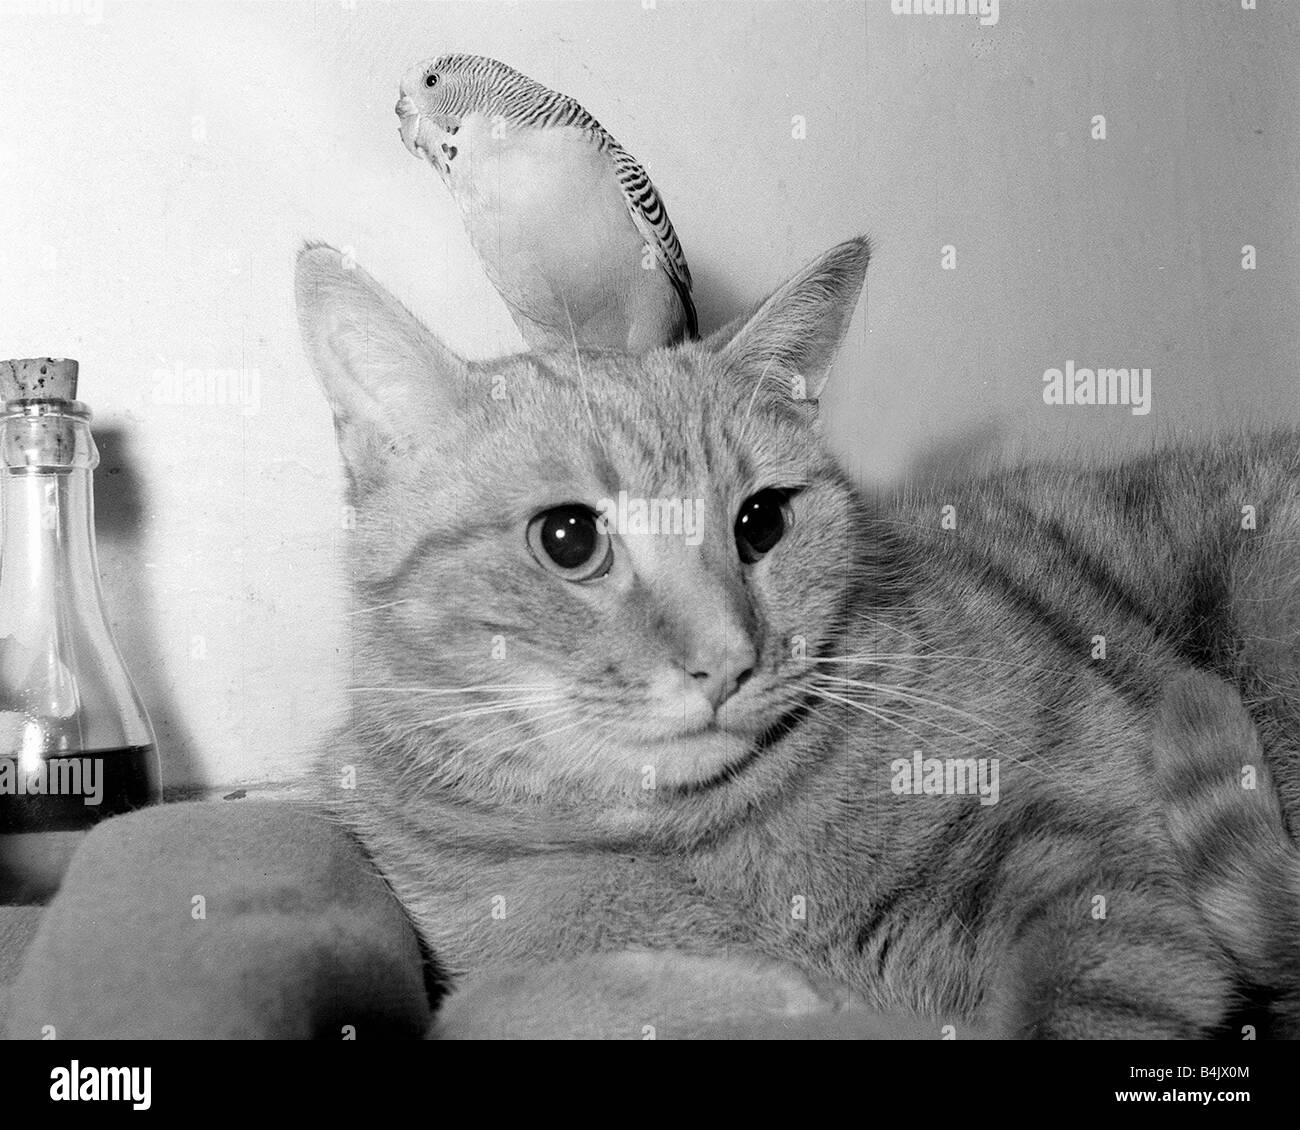 Animals cats and birds budgies budgie on cats head January 1955 Stock Photo